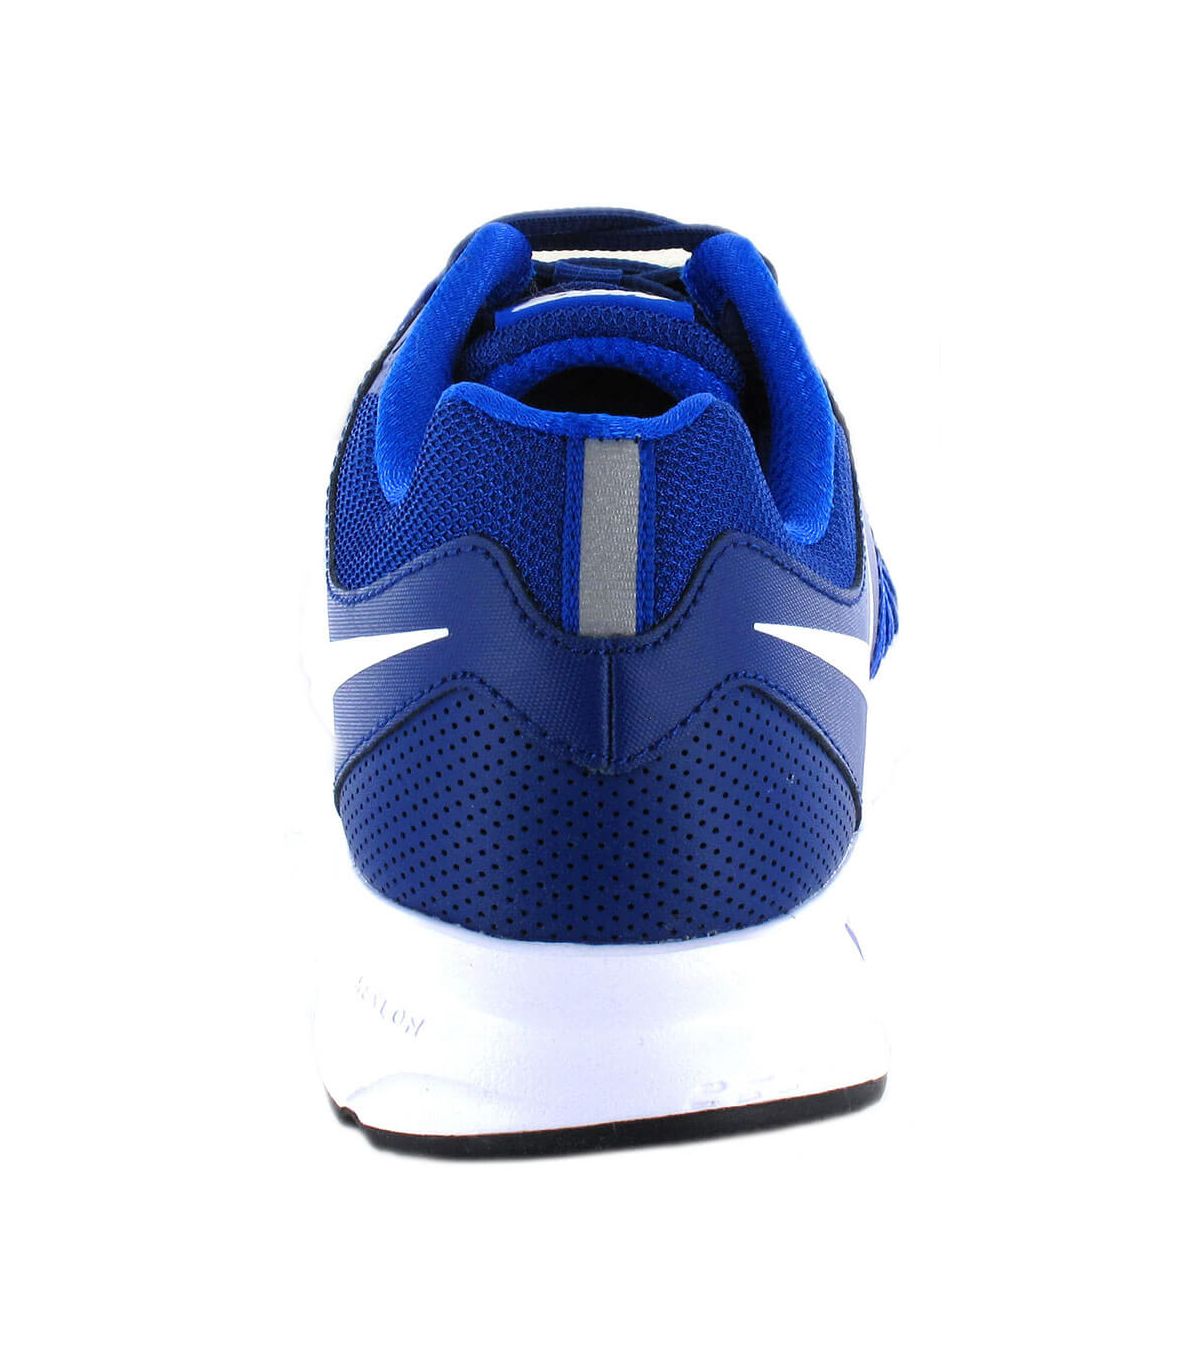 Discrepancia recoger Gracias ➤Nike Air Relentless 6 Azul - Zapatillas Running Hombre l SoloRunning.com